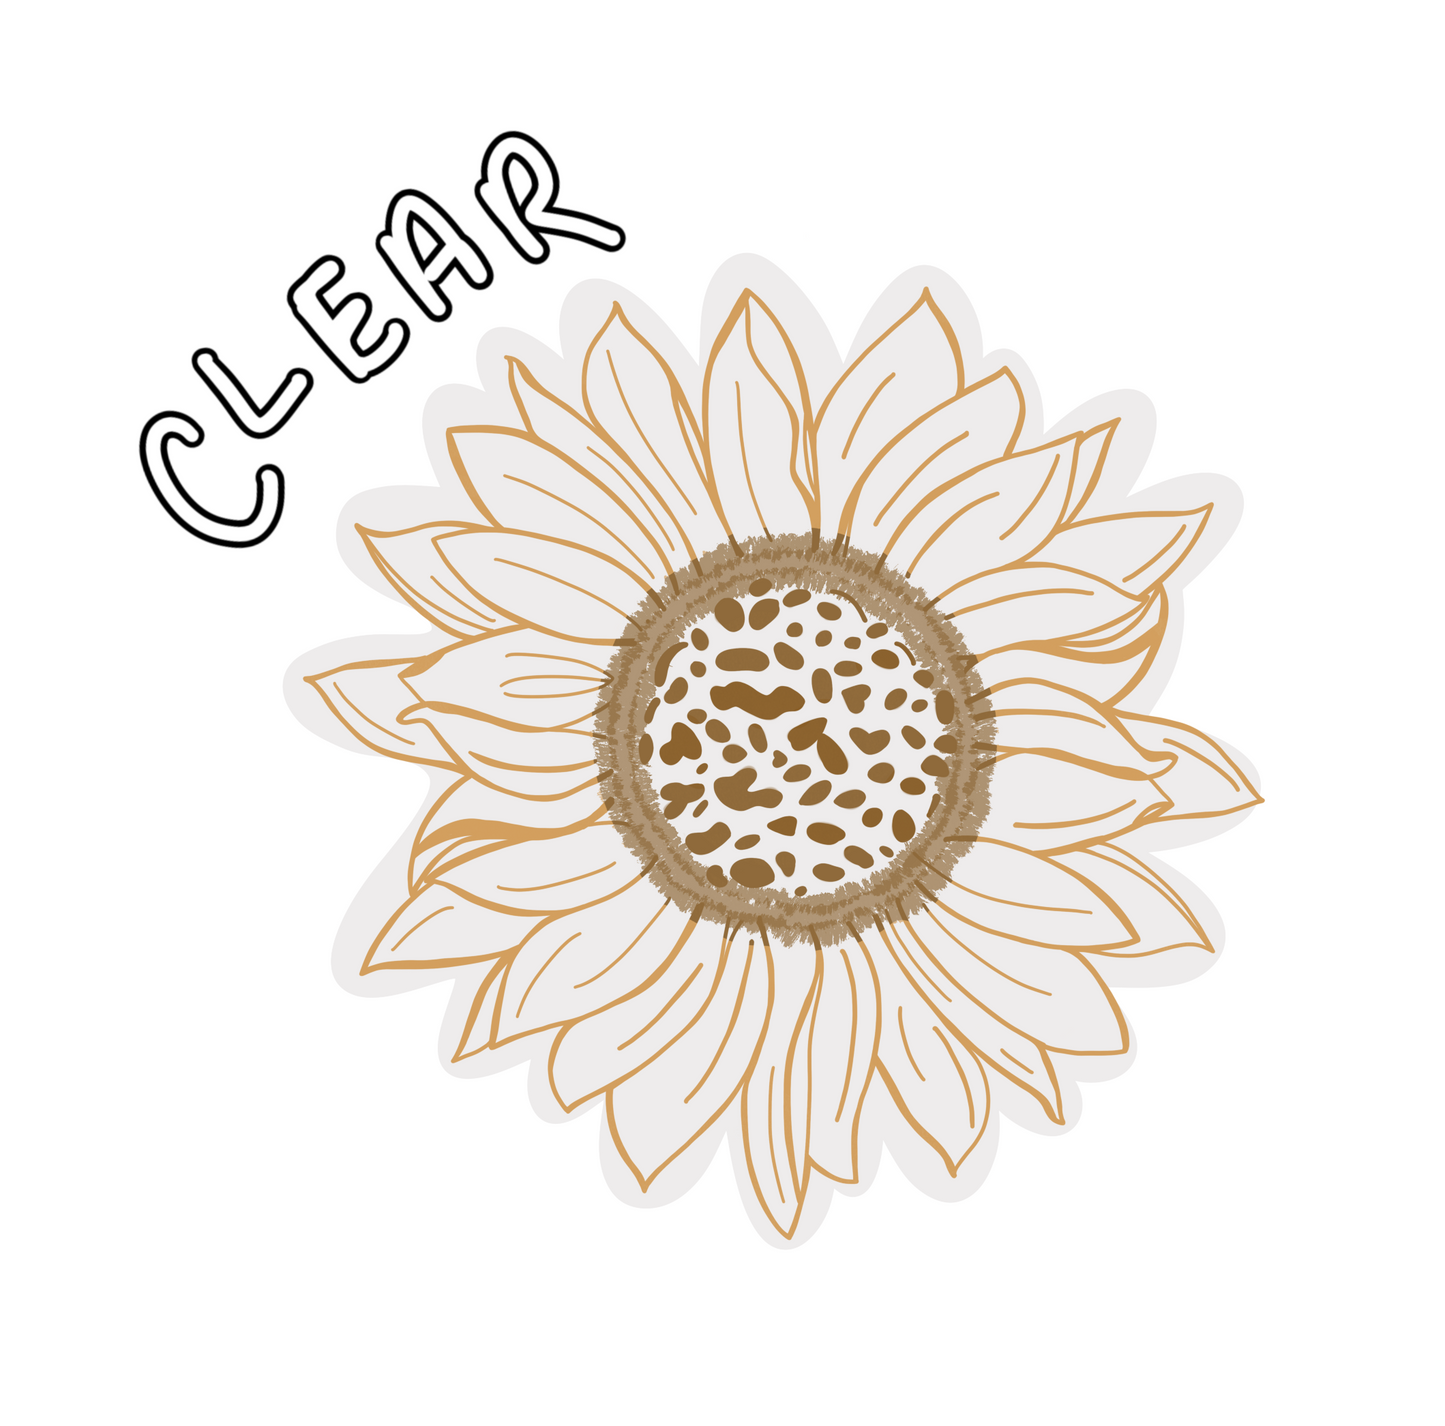 CLEAR Sunflower Waterproof Vinyl Sticker